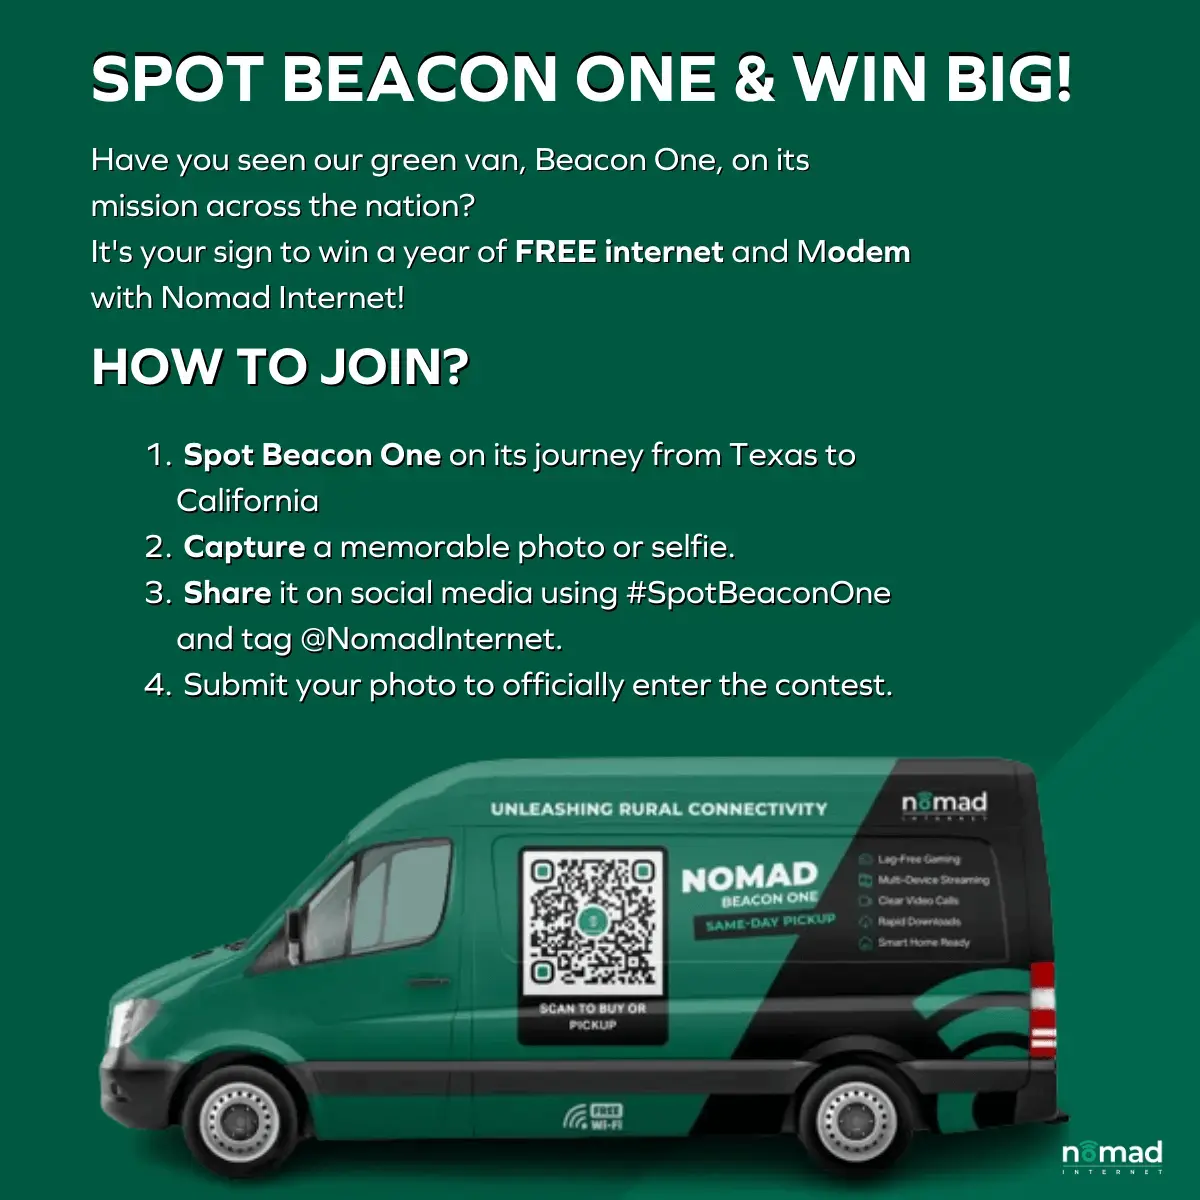 Spot Beacon One & Win Big